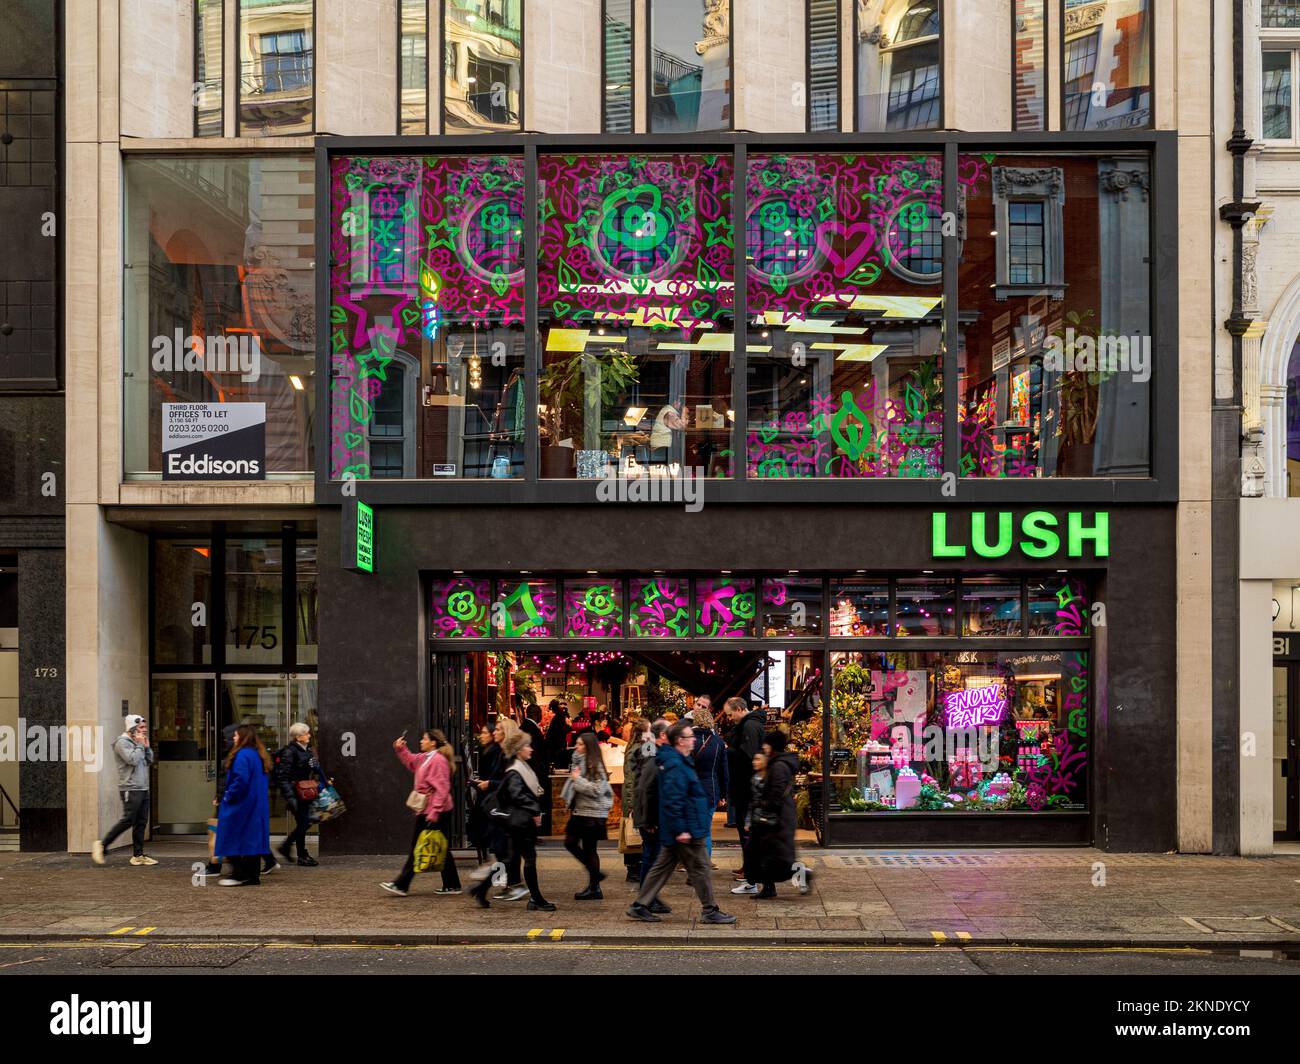 Exlush Spa Oxford Street London: La tienda insignia Exlush Store en Oxford St Central London, con tiendas y spa. Lush fue fundada en 1995. Foto de stock